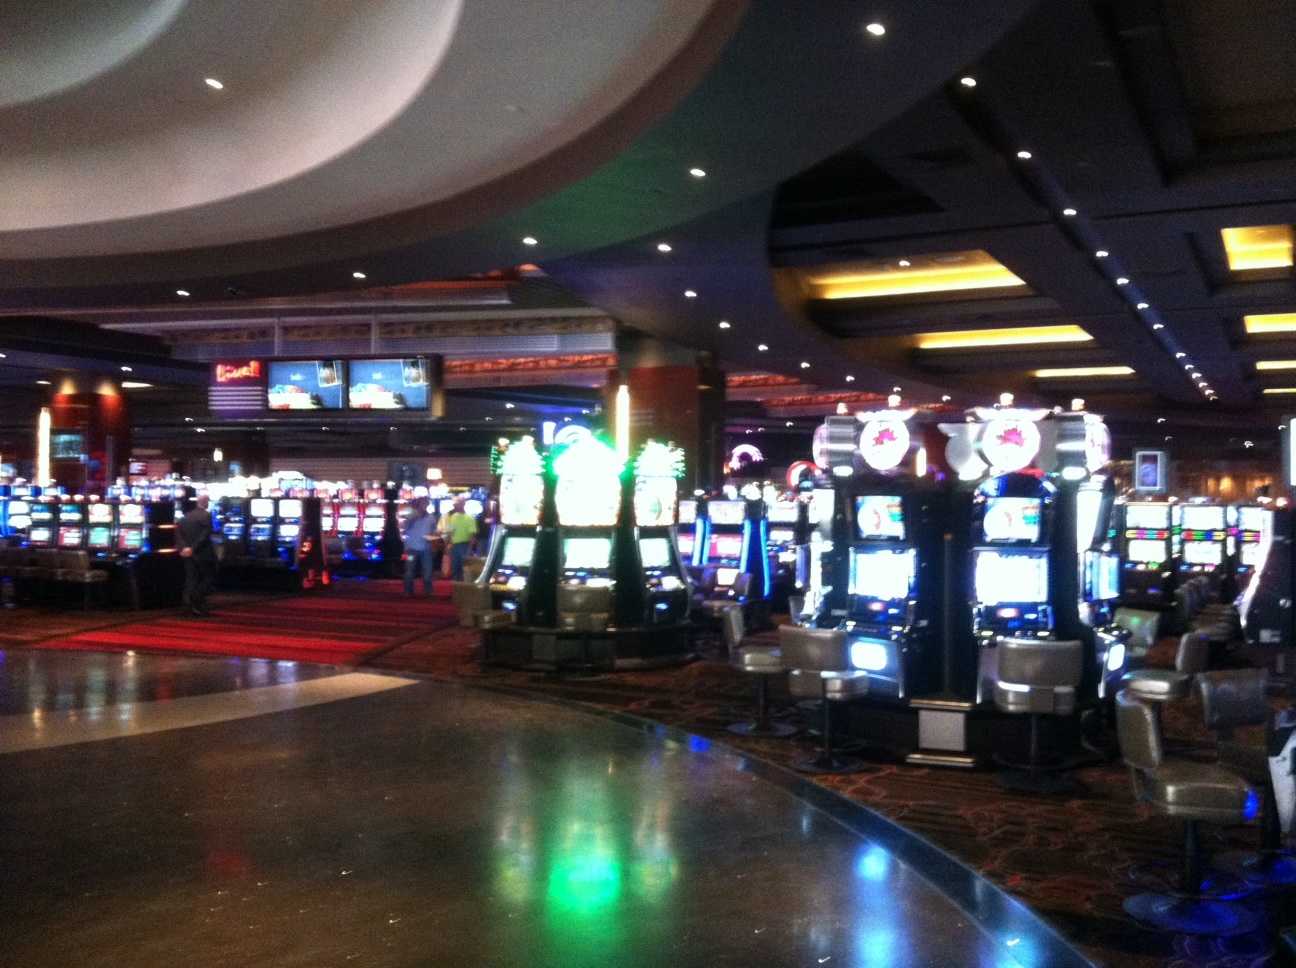 live casino maryland hotel